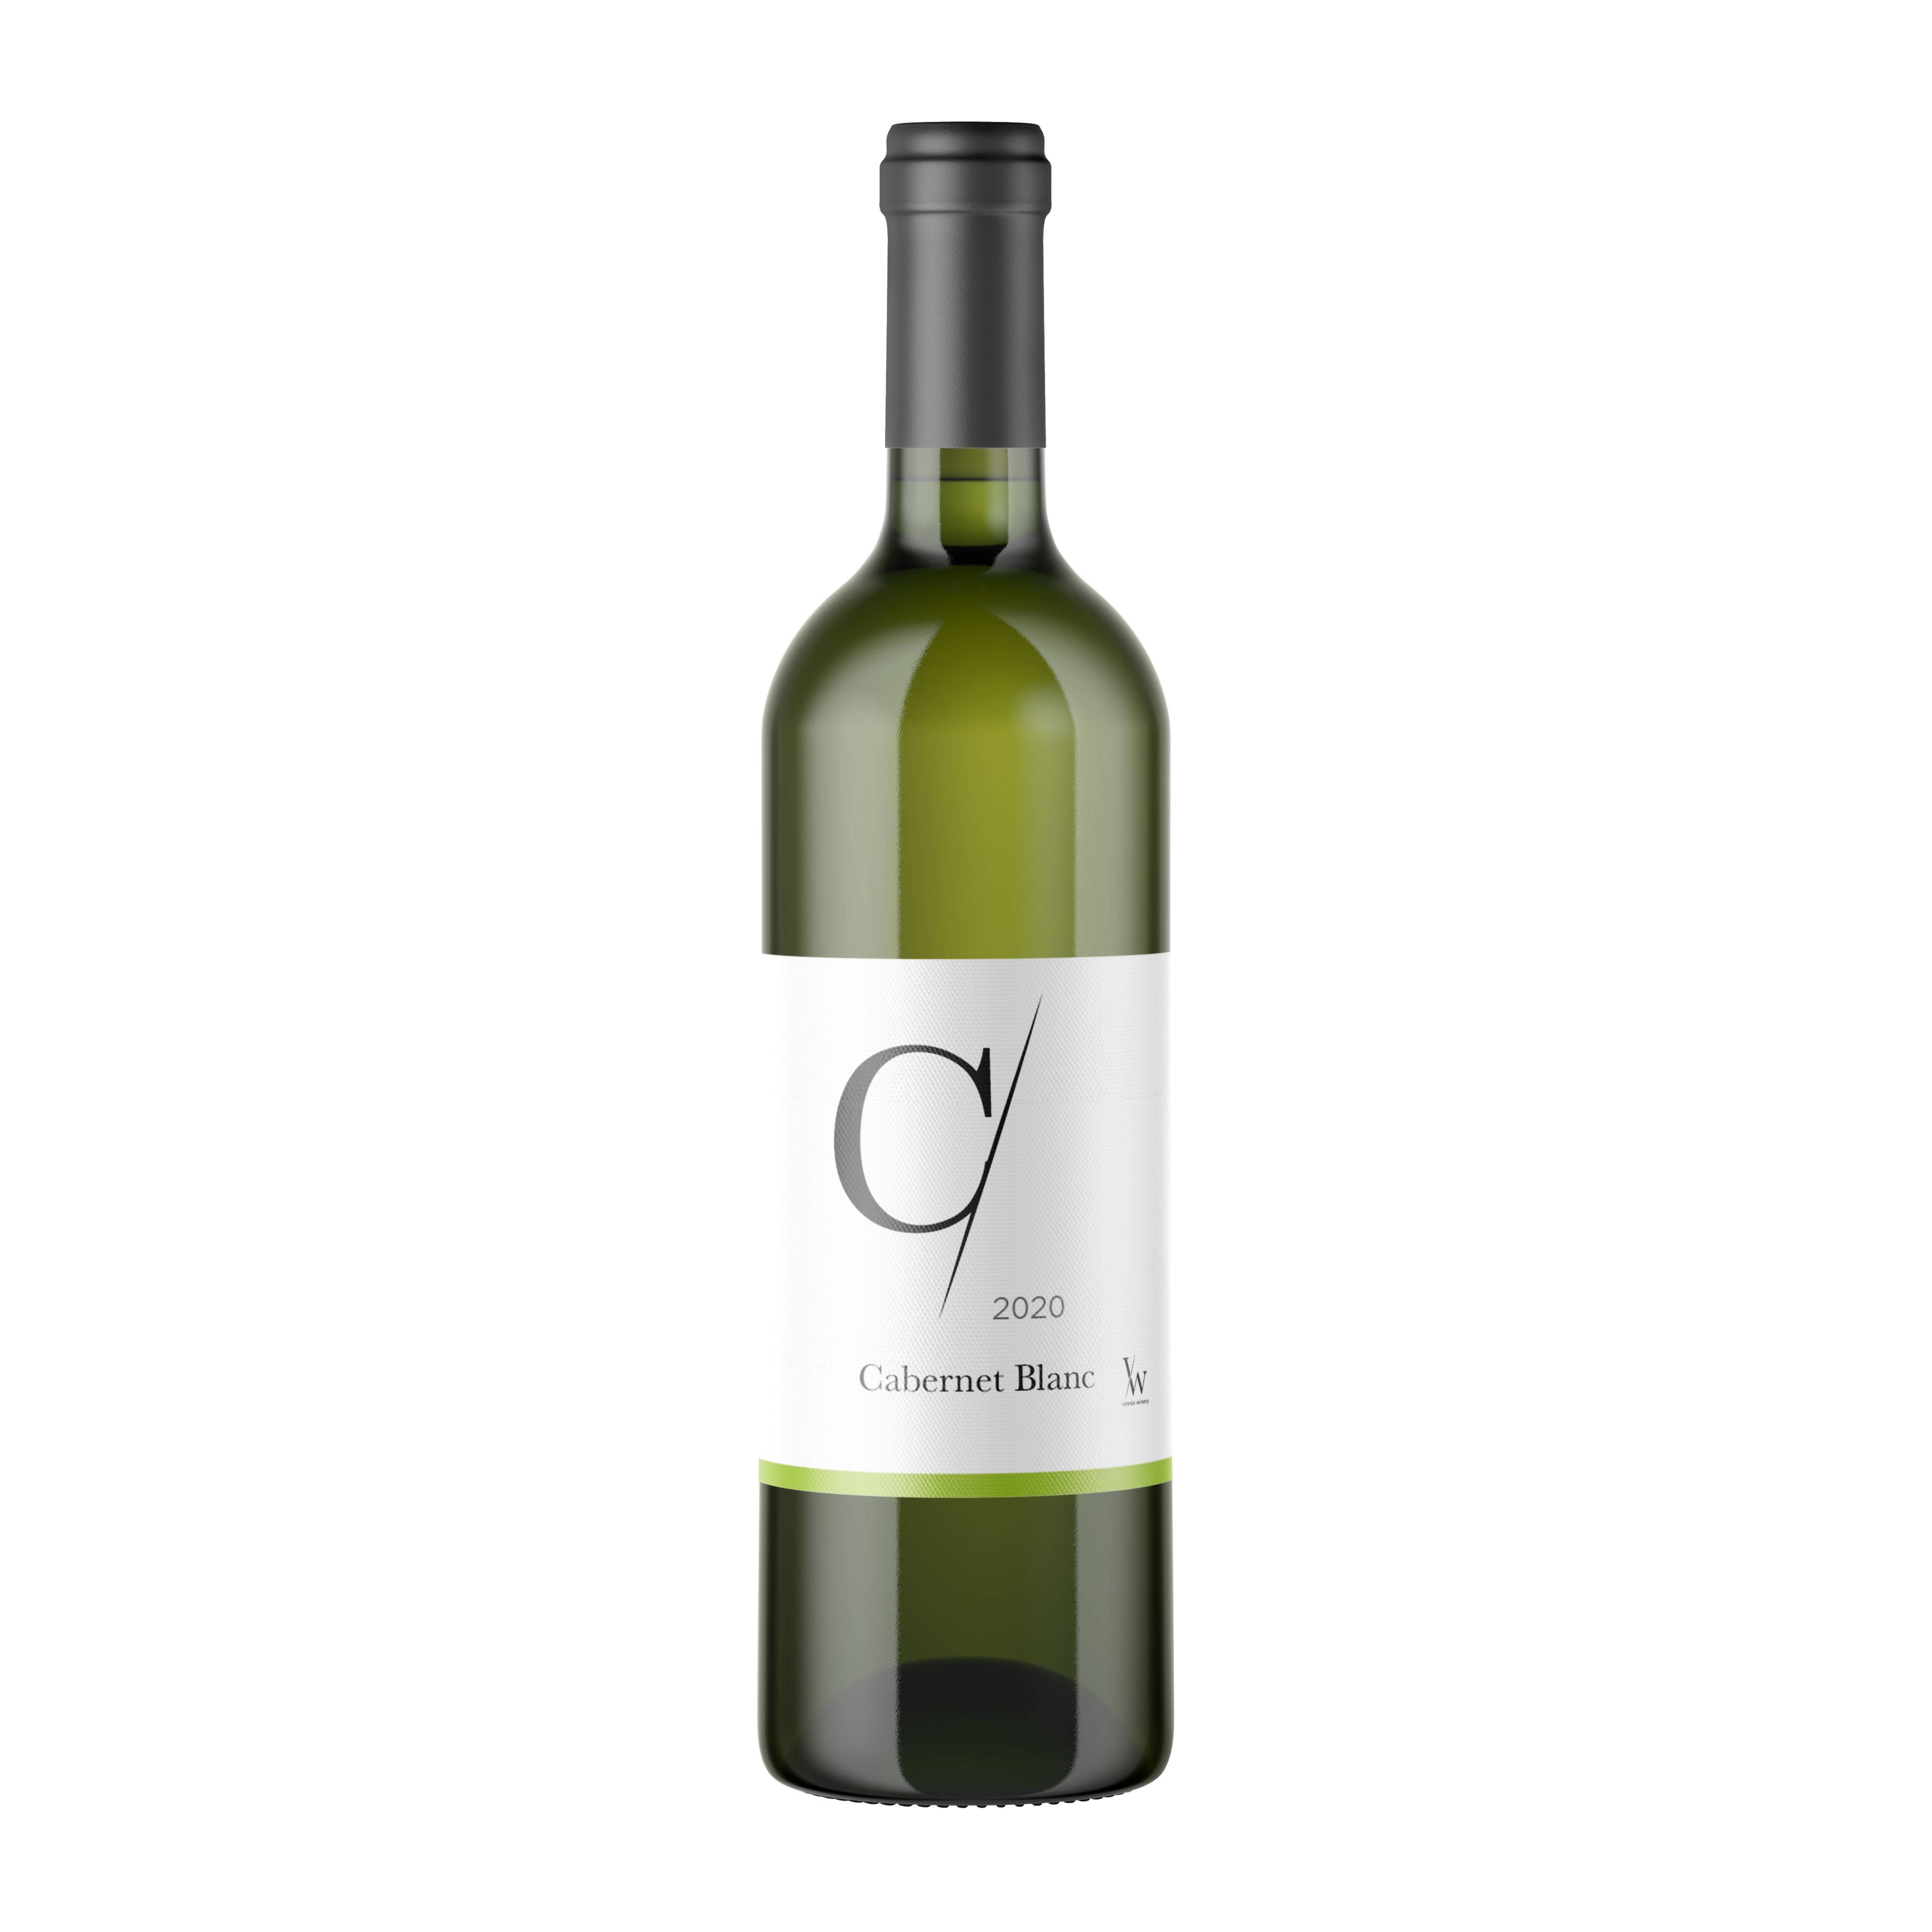 Vinnio Winery - Cabernet blanc 2020